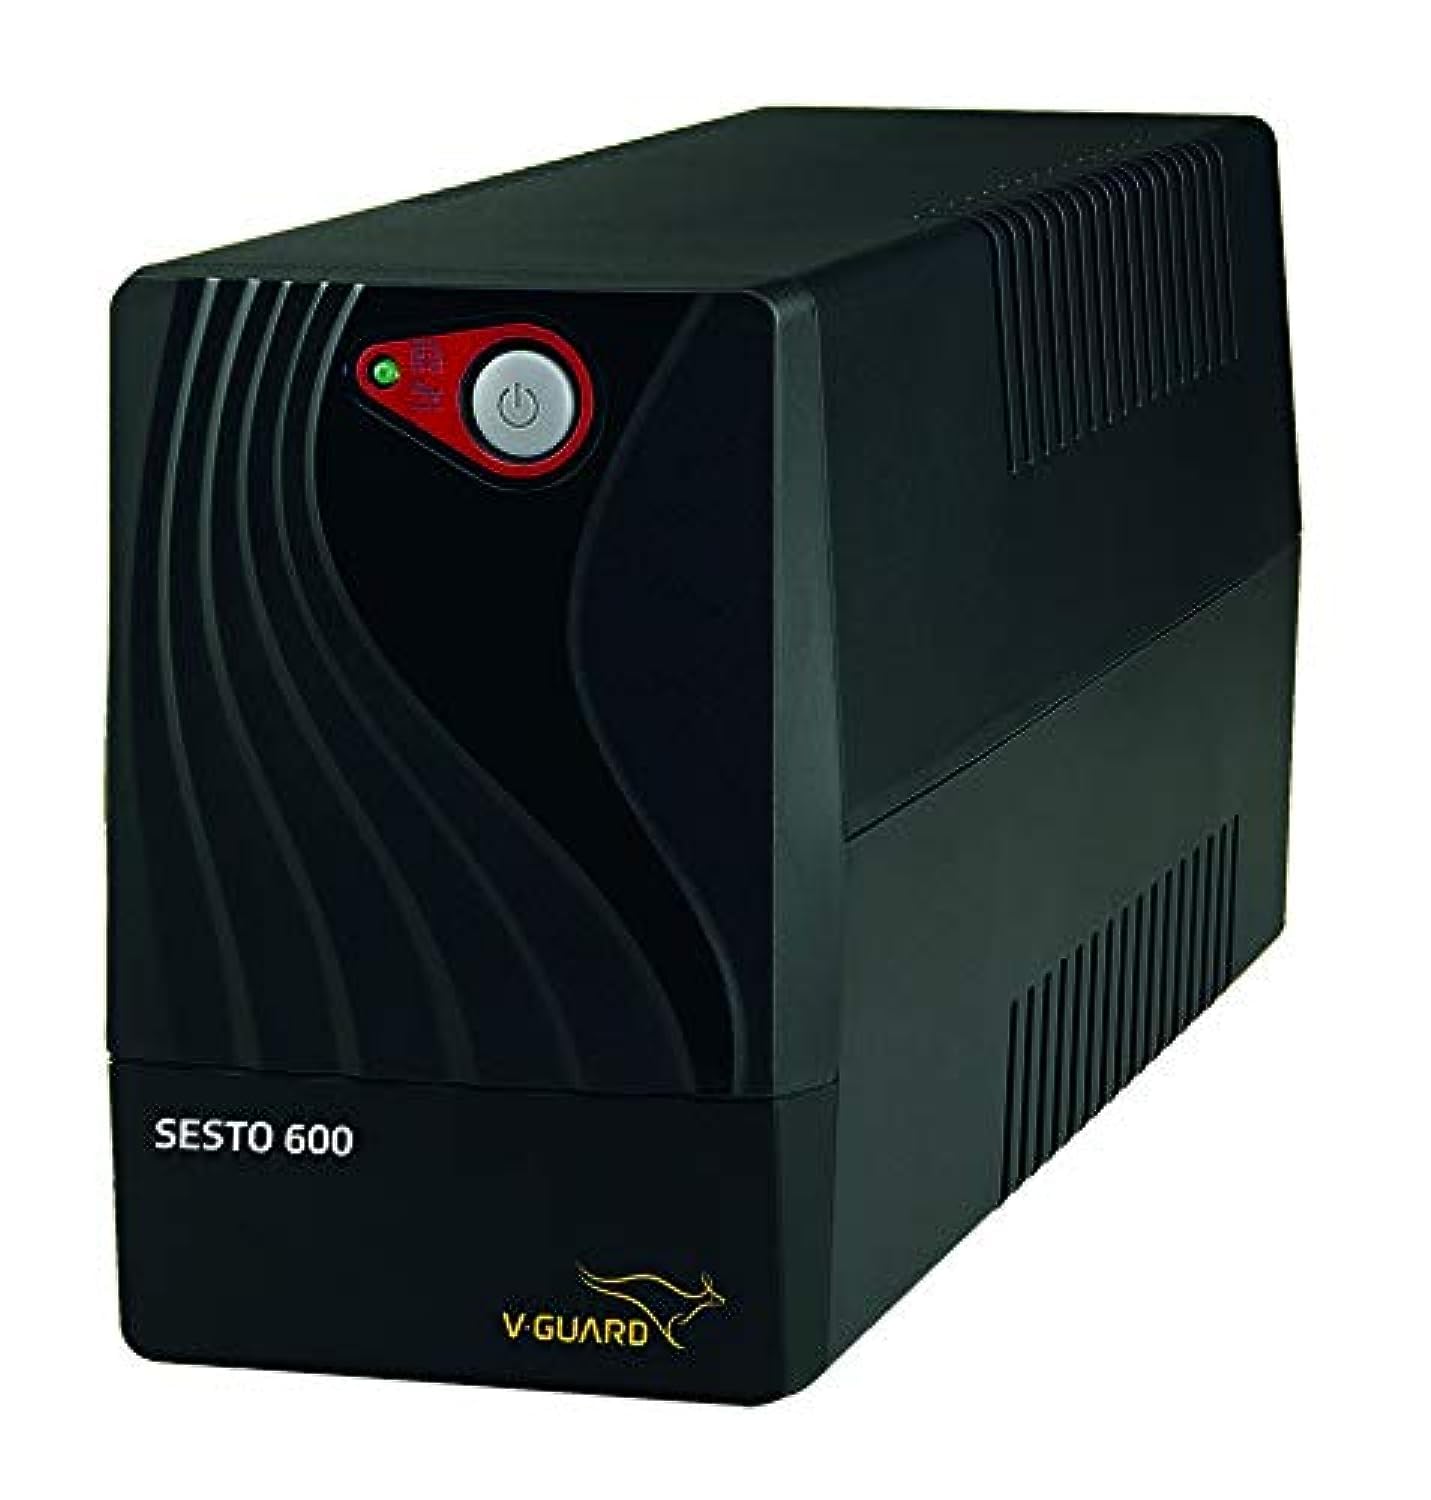 V-Guard Sesto 600 UPS for Power Backup & Protection